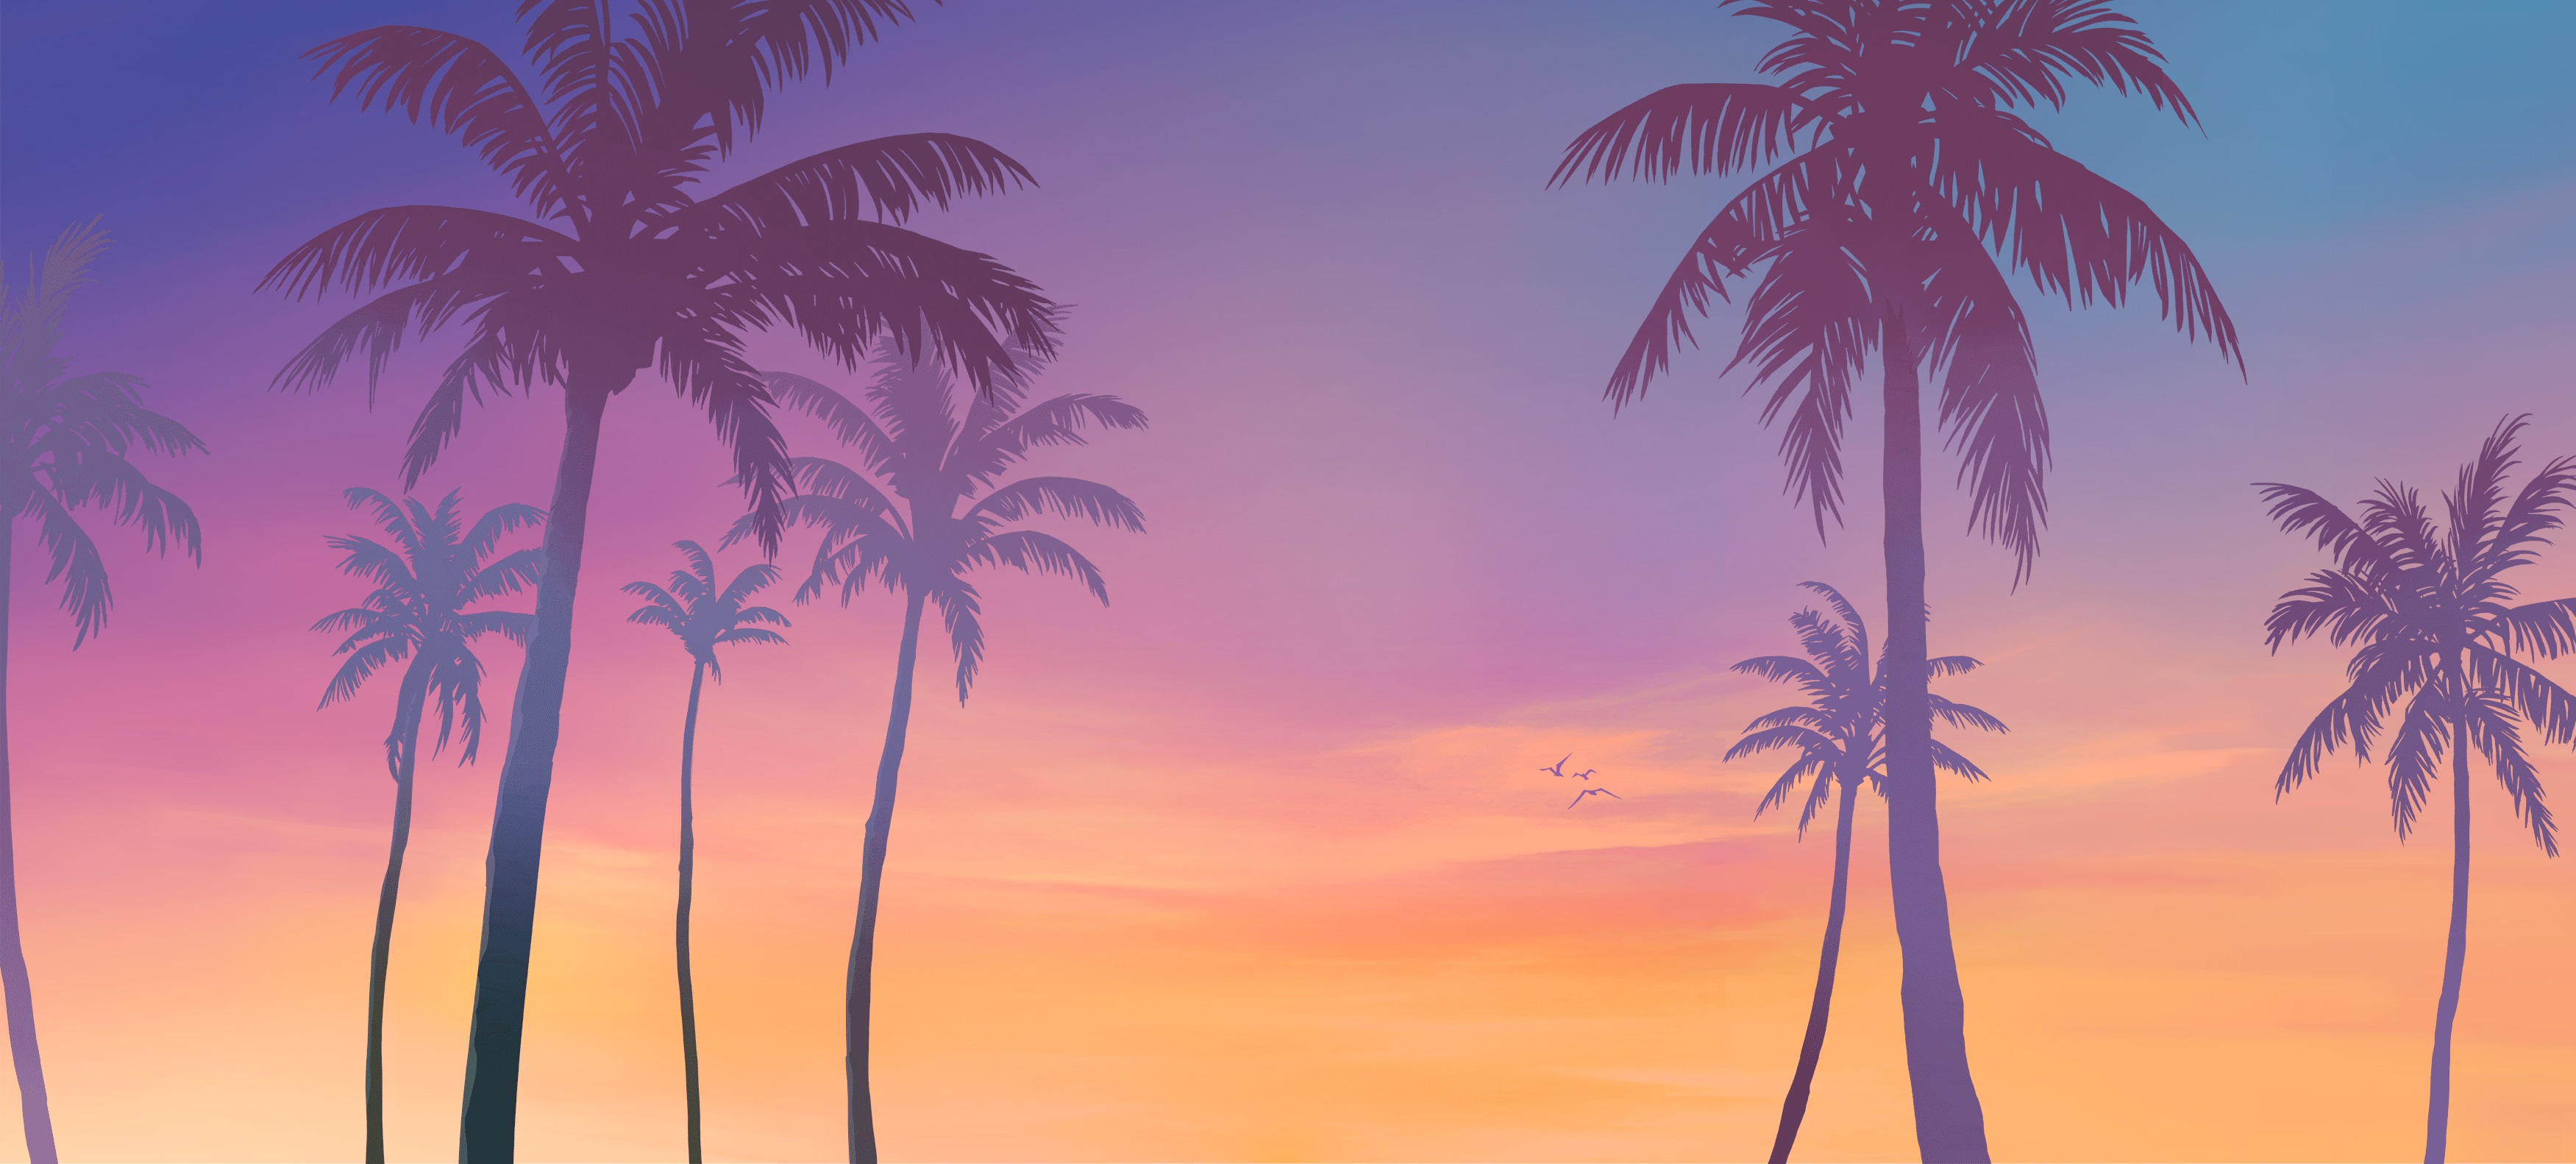 Grand Theft Auto Games Workshop Minimalism Palm Trees Sunset Glow 3502x1582